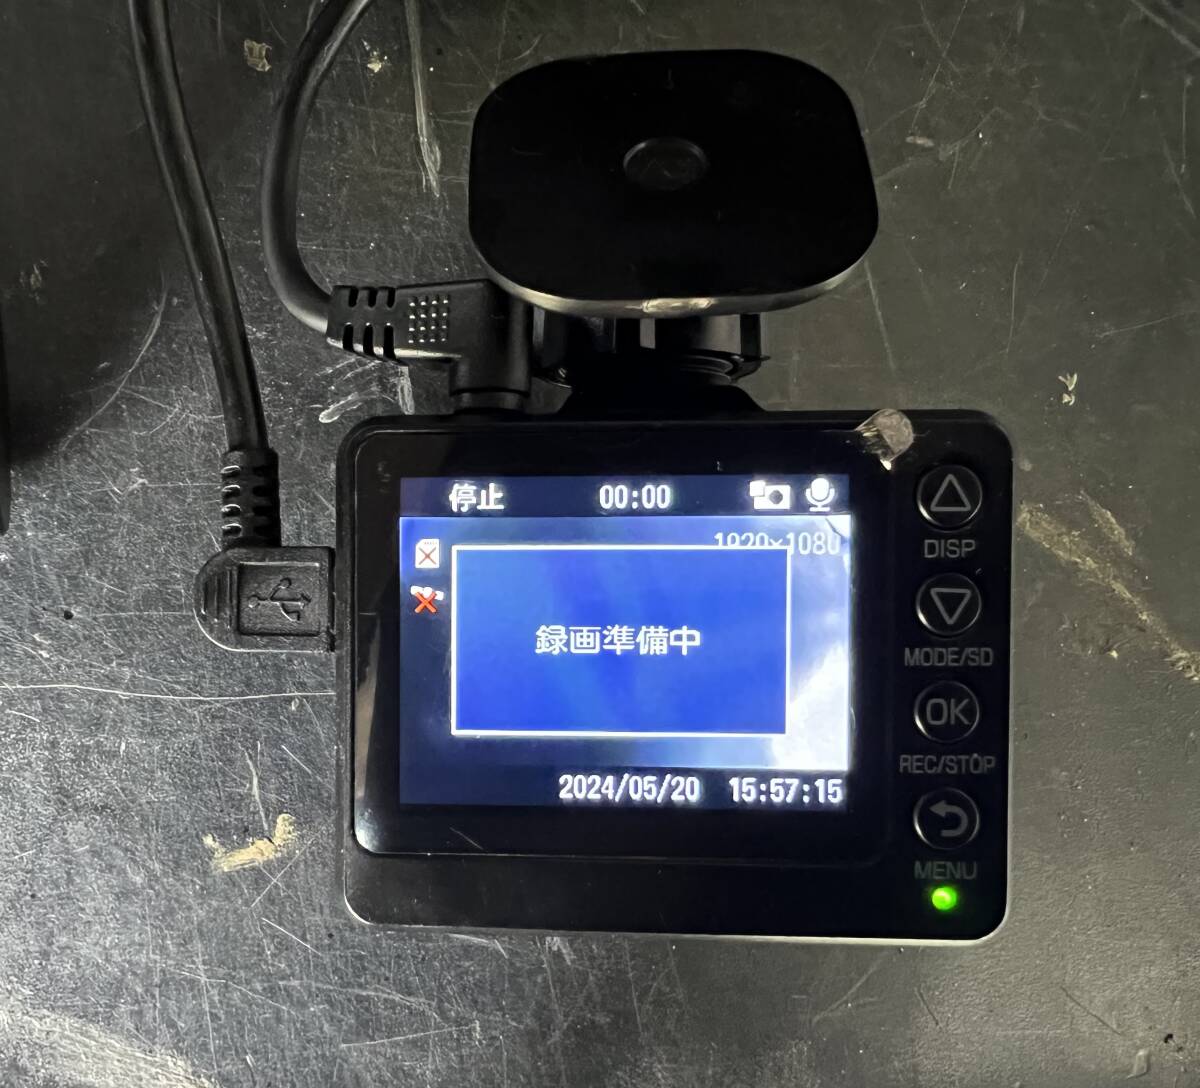  Юпитер регистратор пути (drive recorder) SN-TW9700 передний и задний (до и после) камера 1000 иен распродажа 